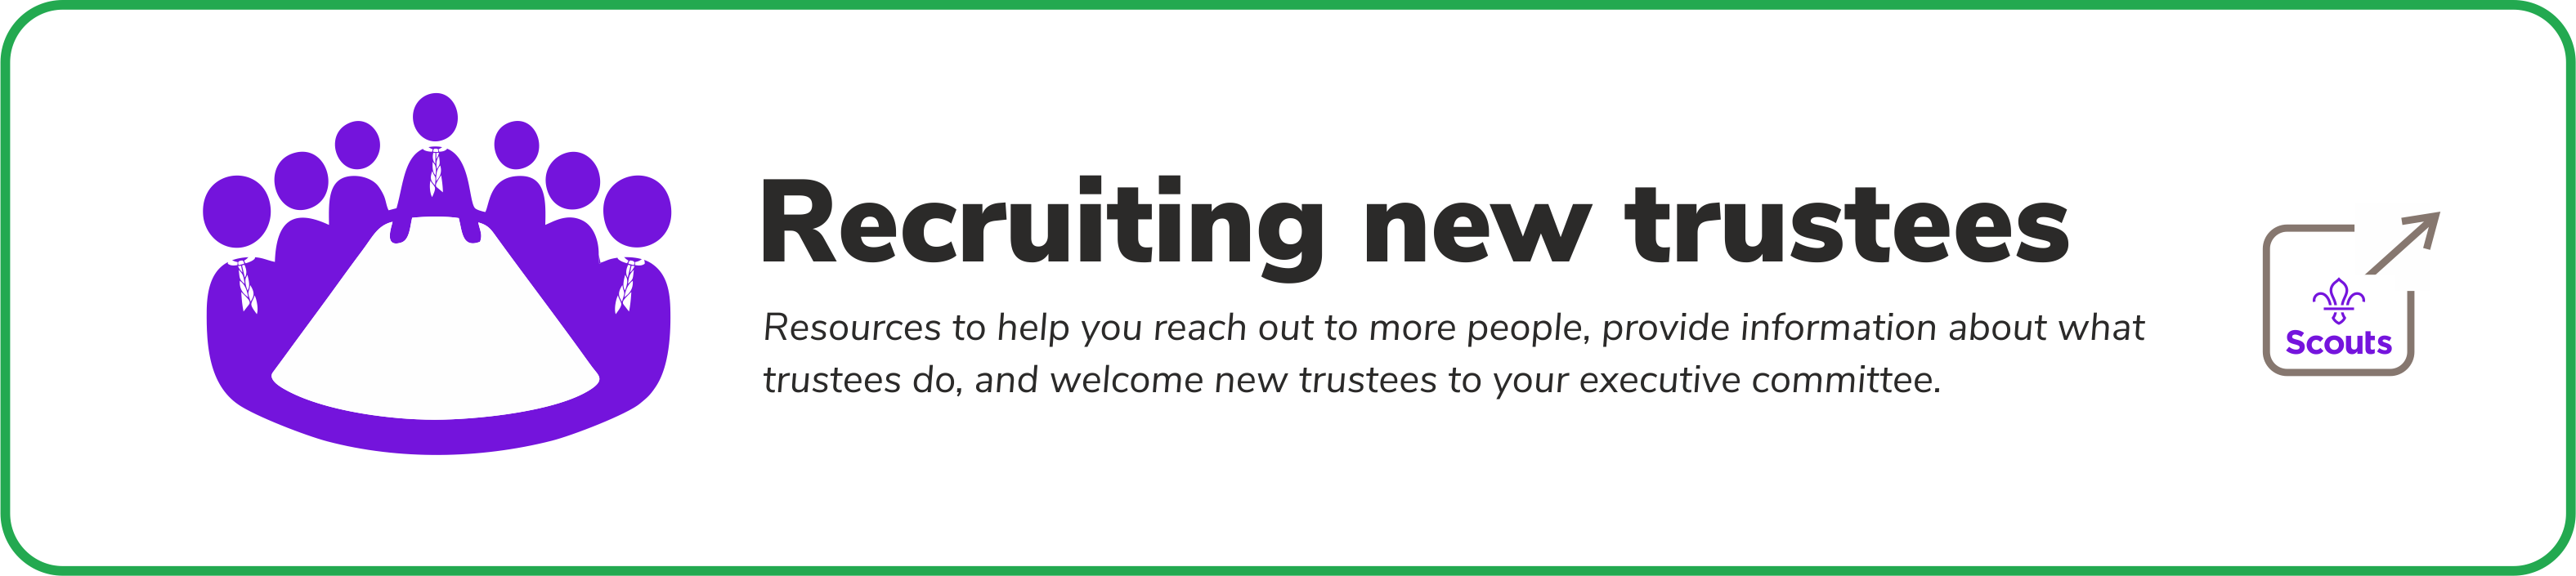 Recruiting new trustees